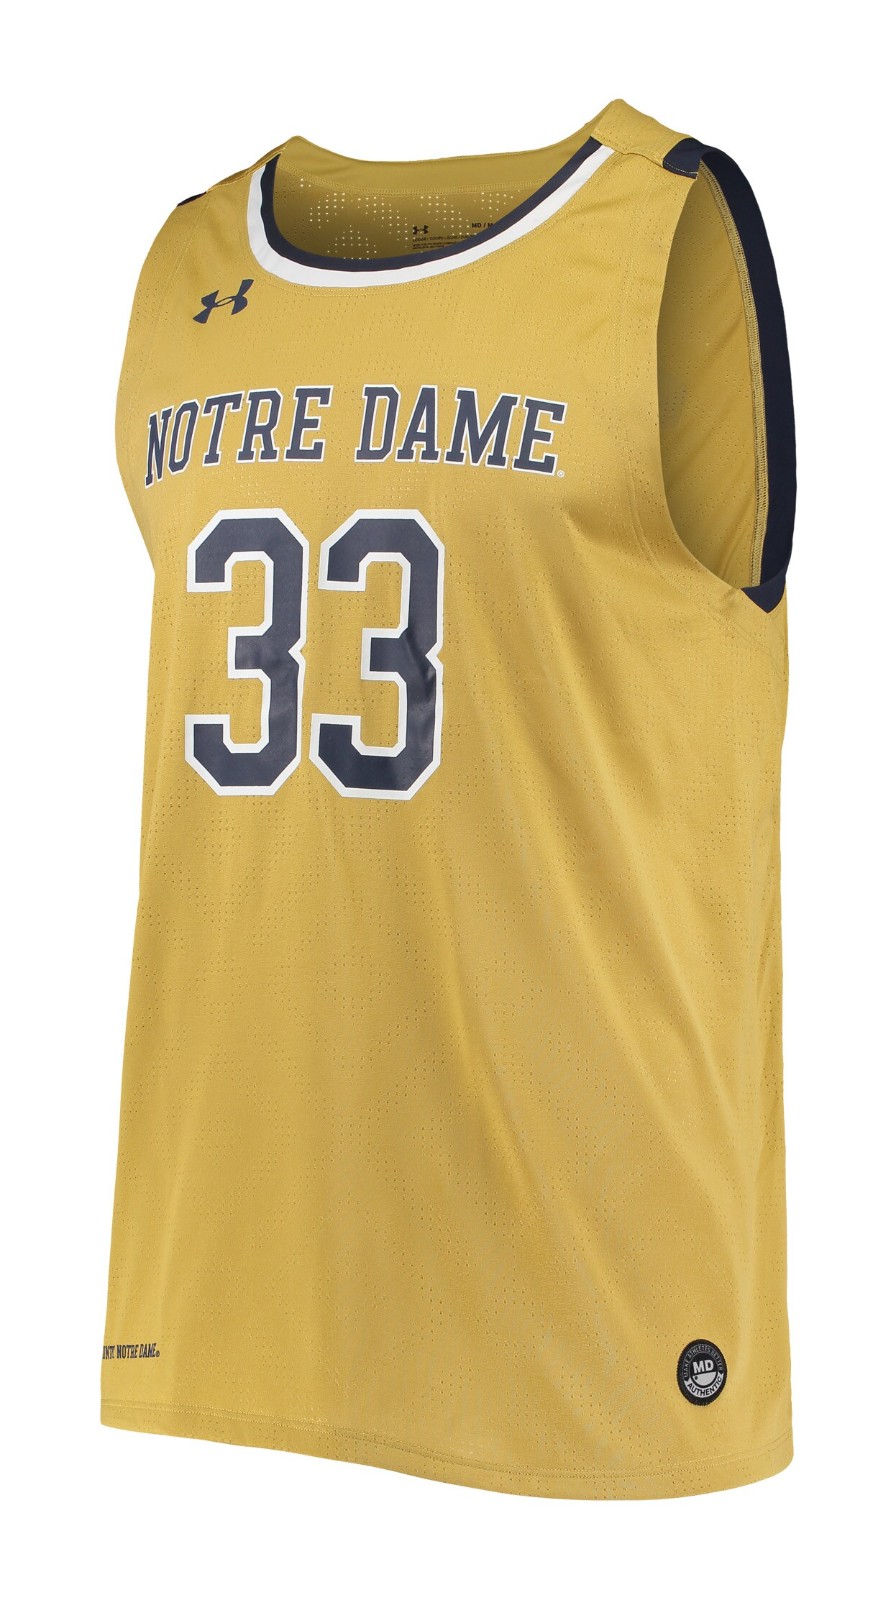 Notre Dame's Boston Shamrock Series jerseys a no-brainer - Sports